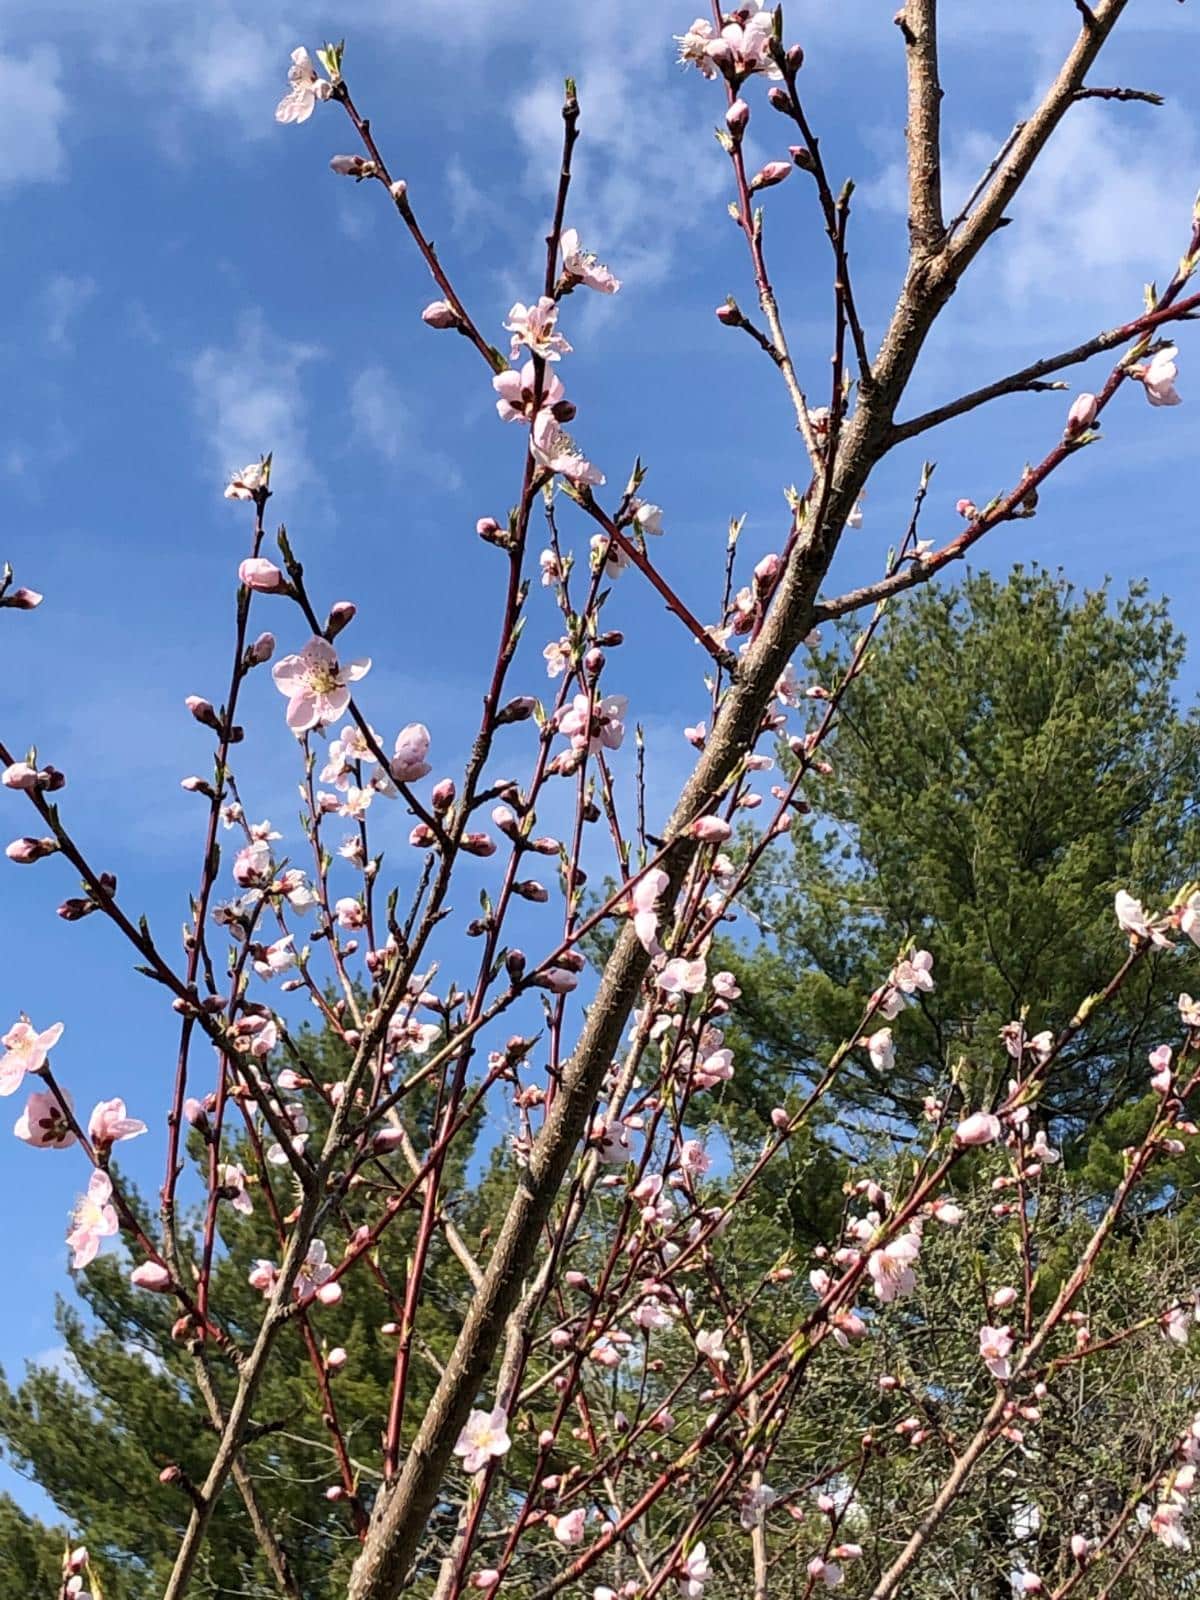 A fruit tree in bloom in spring